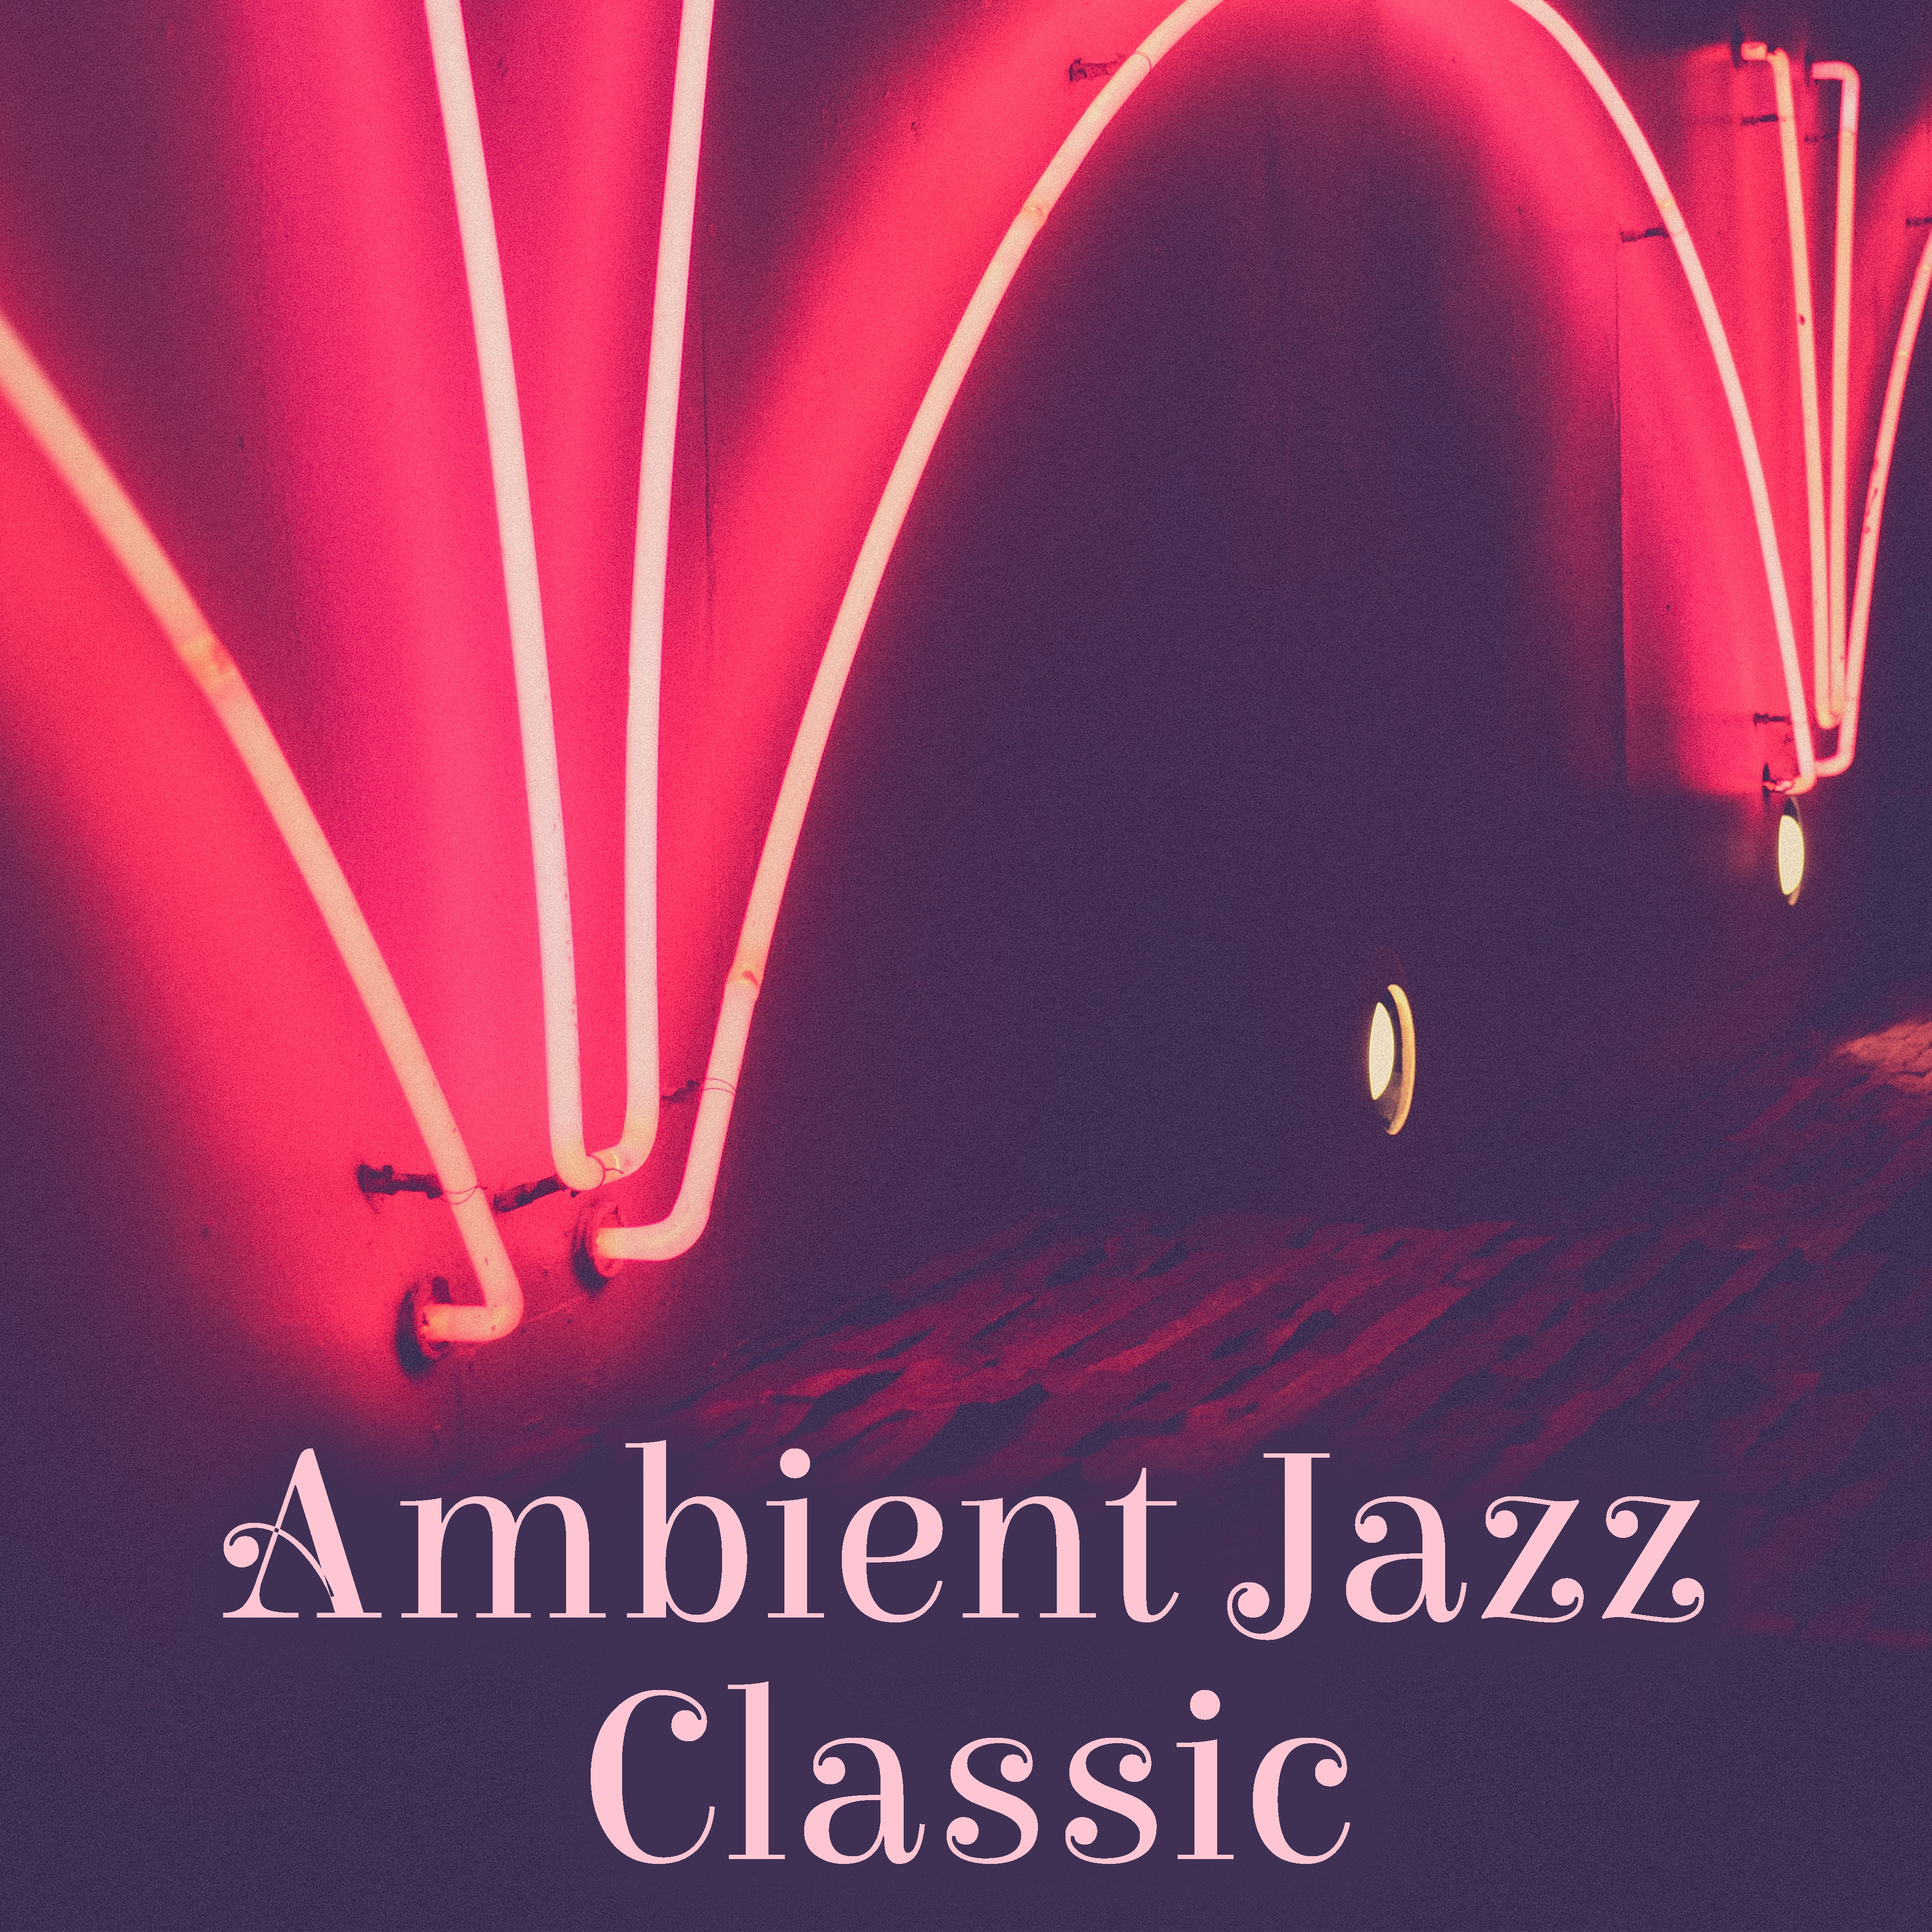 Ambient Jazz Classic  Instrumental Music, Jazz, New Album 2017, Relaxing Jazz